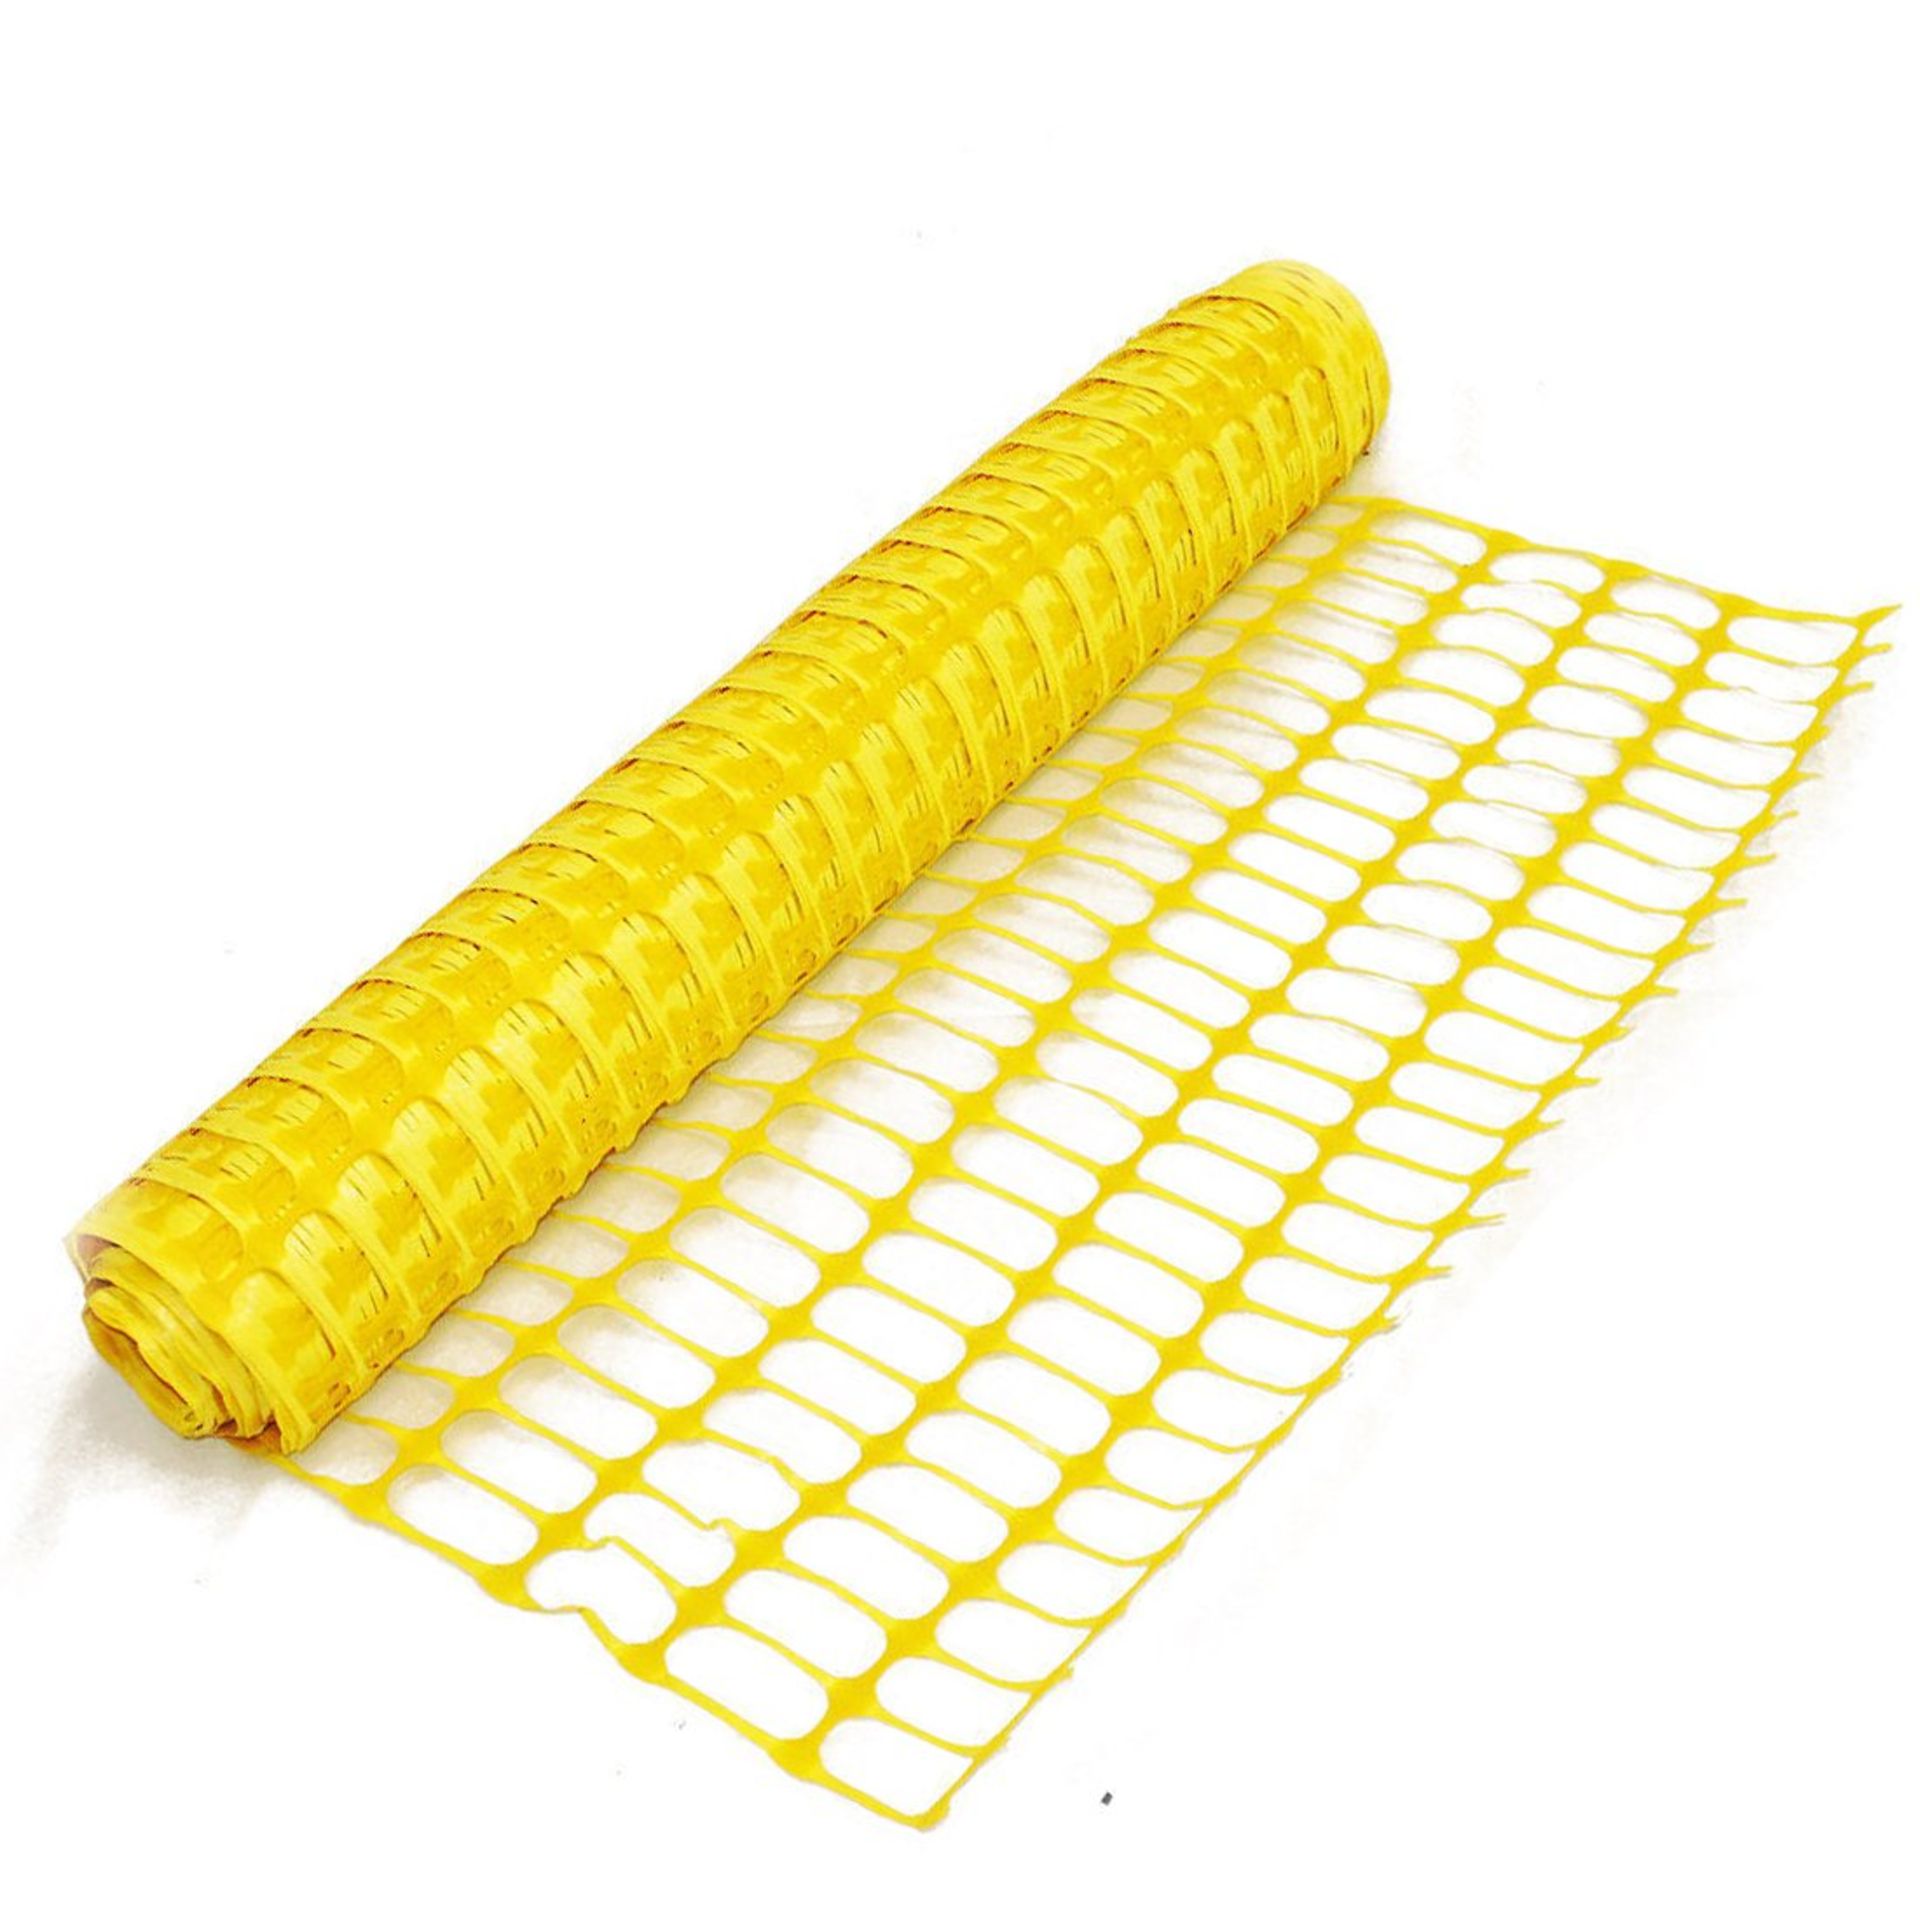 (F10) Heavy Duty Yellow Safety Barrier Mesh Fencing 1mtr x 25mtr Roll Dimensions 1m x 25m Dur...